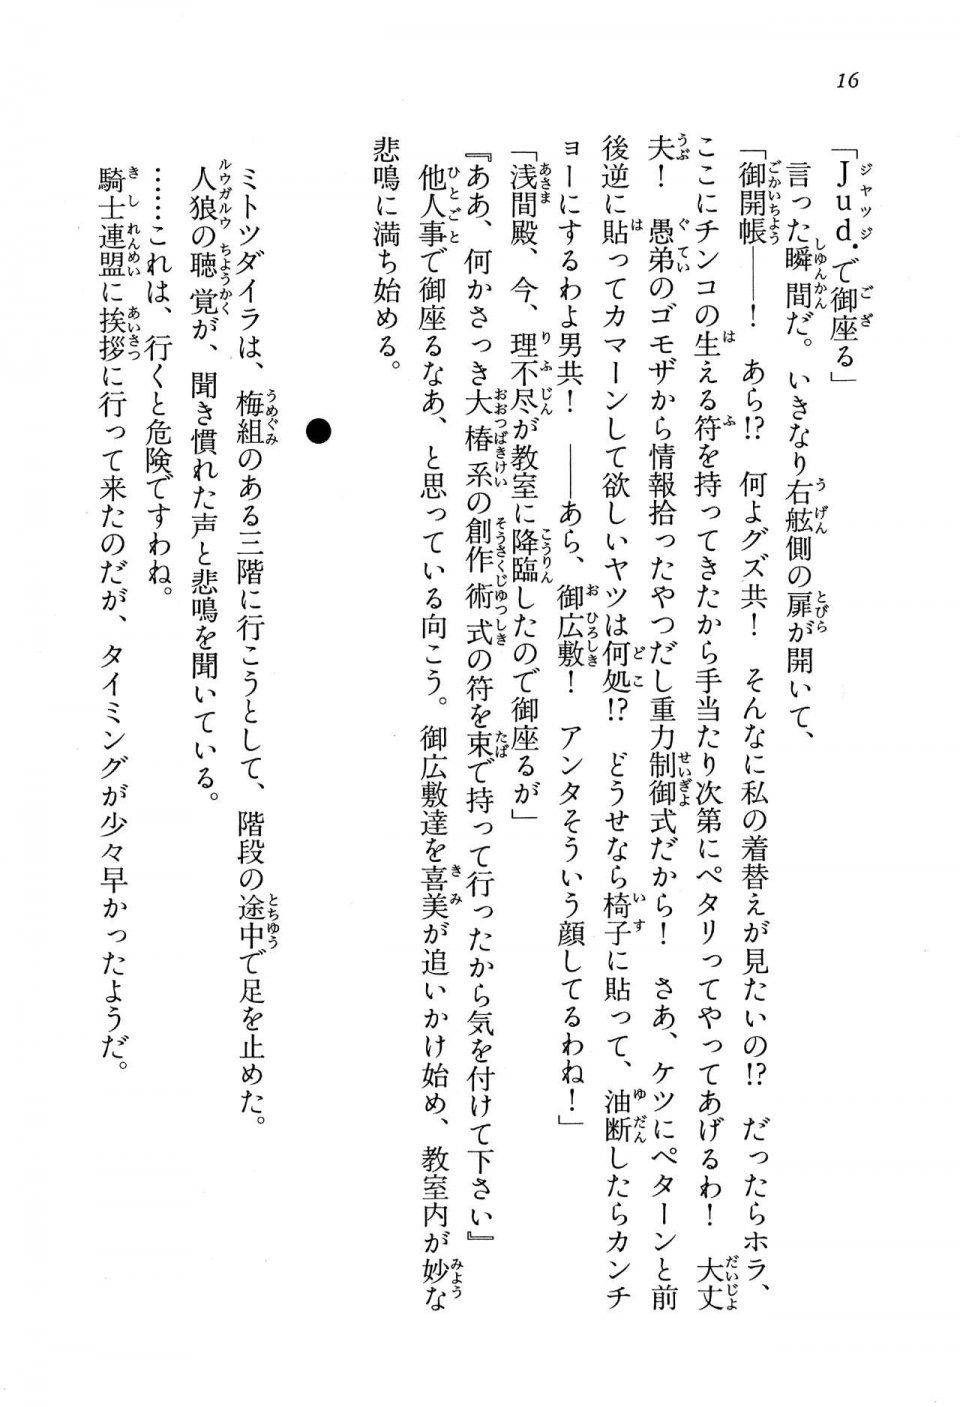 Kyoukai Senjou no Horizon BD Special Mininovel Vol 8(4B) - Photo #20